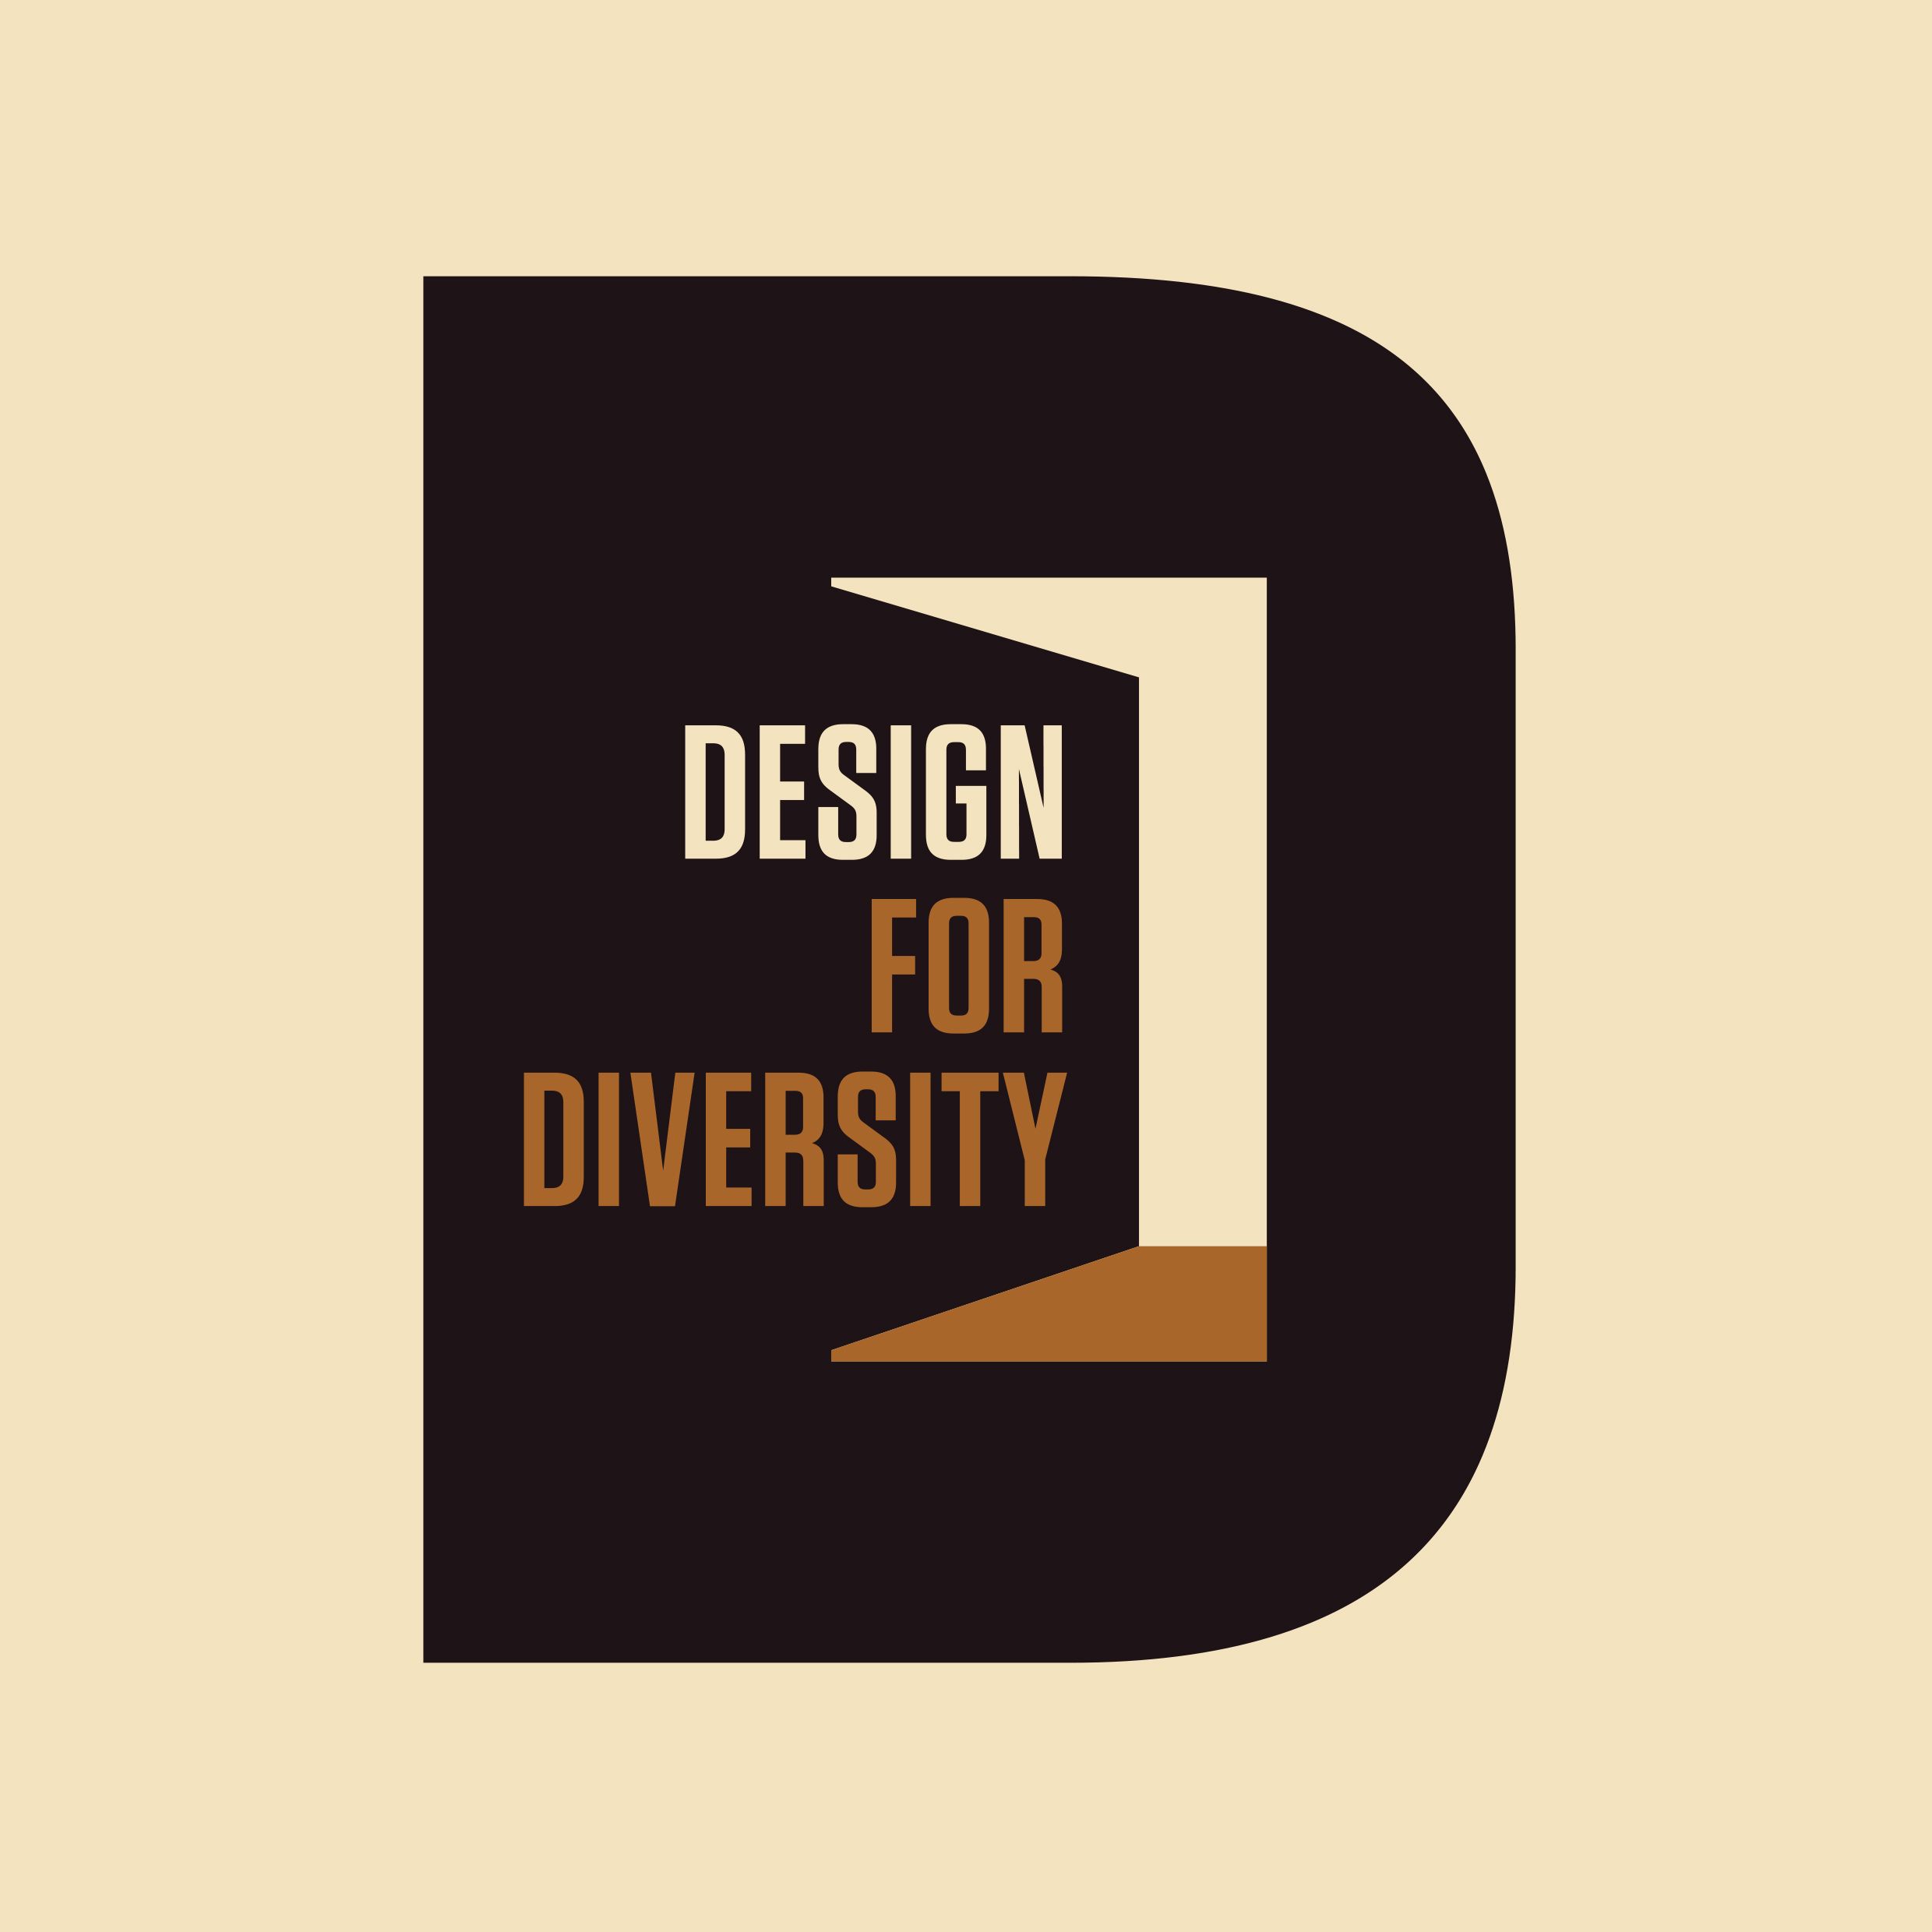 We've signed the Design for Diversity Pledge